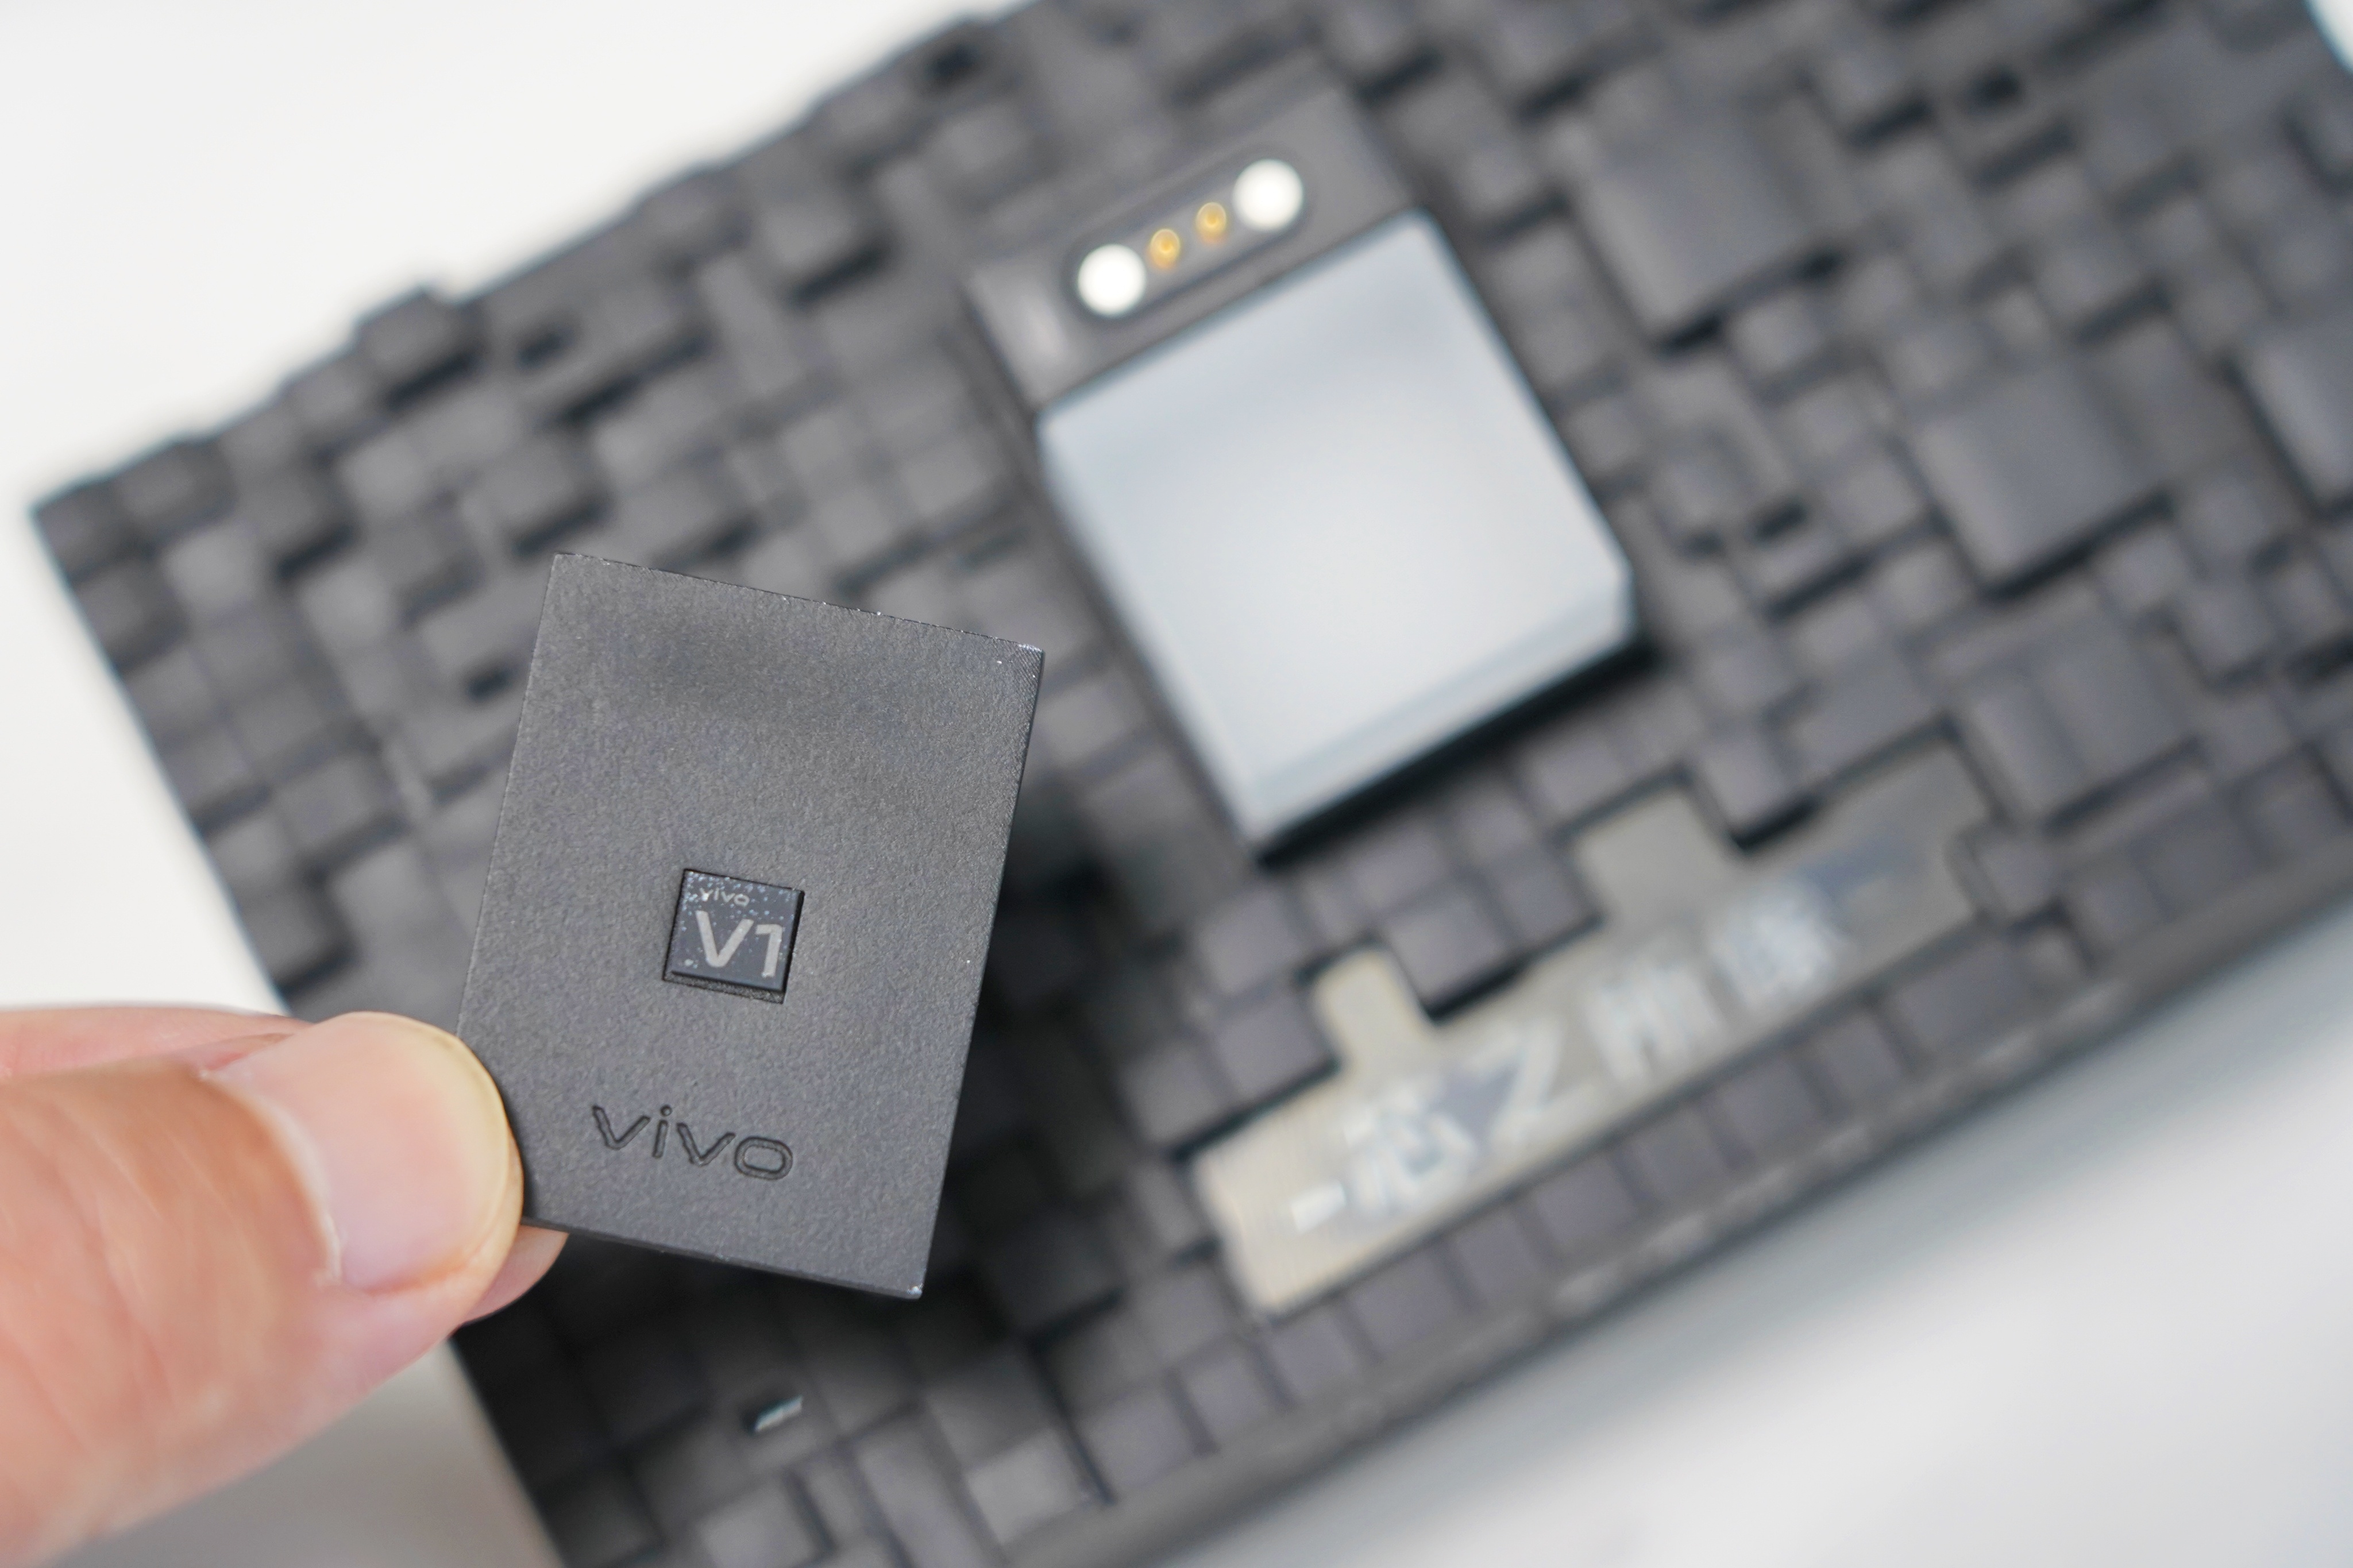 Vivo kündigt Vivo V1 an - proprietärer Bildprozessor